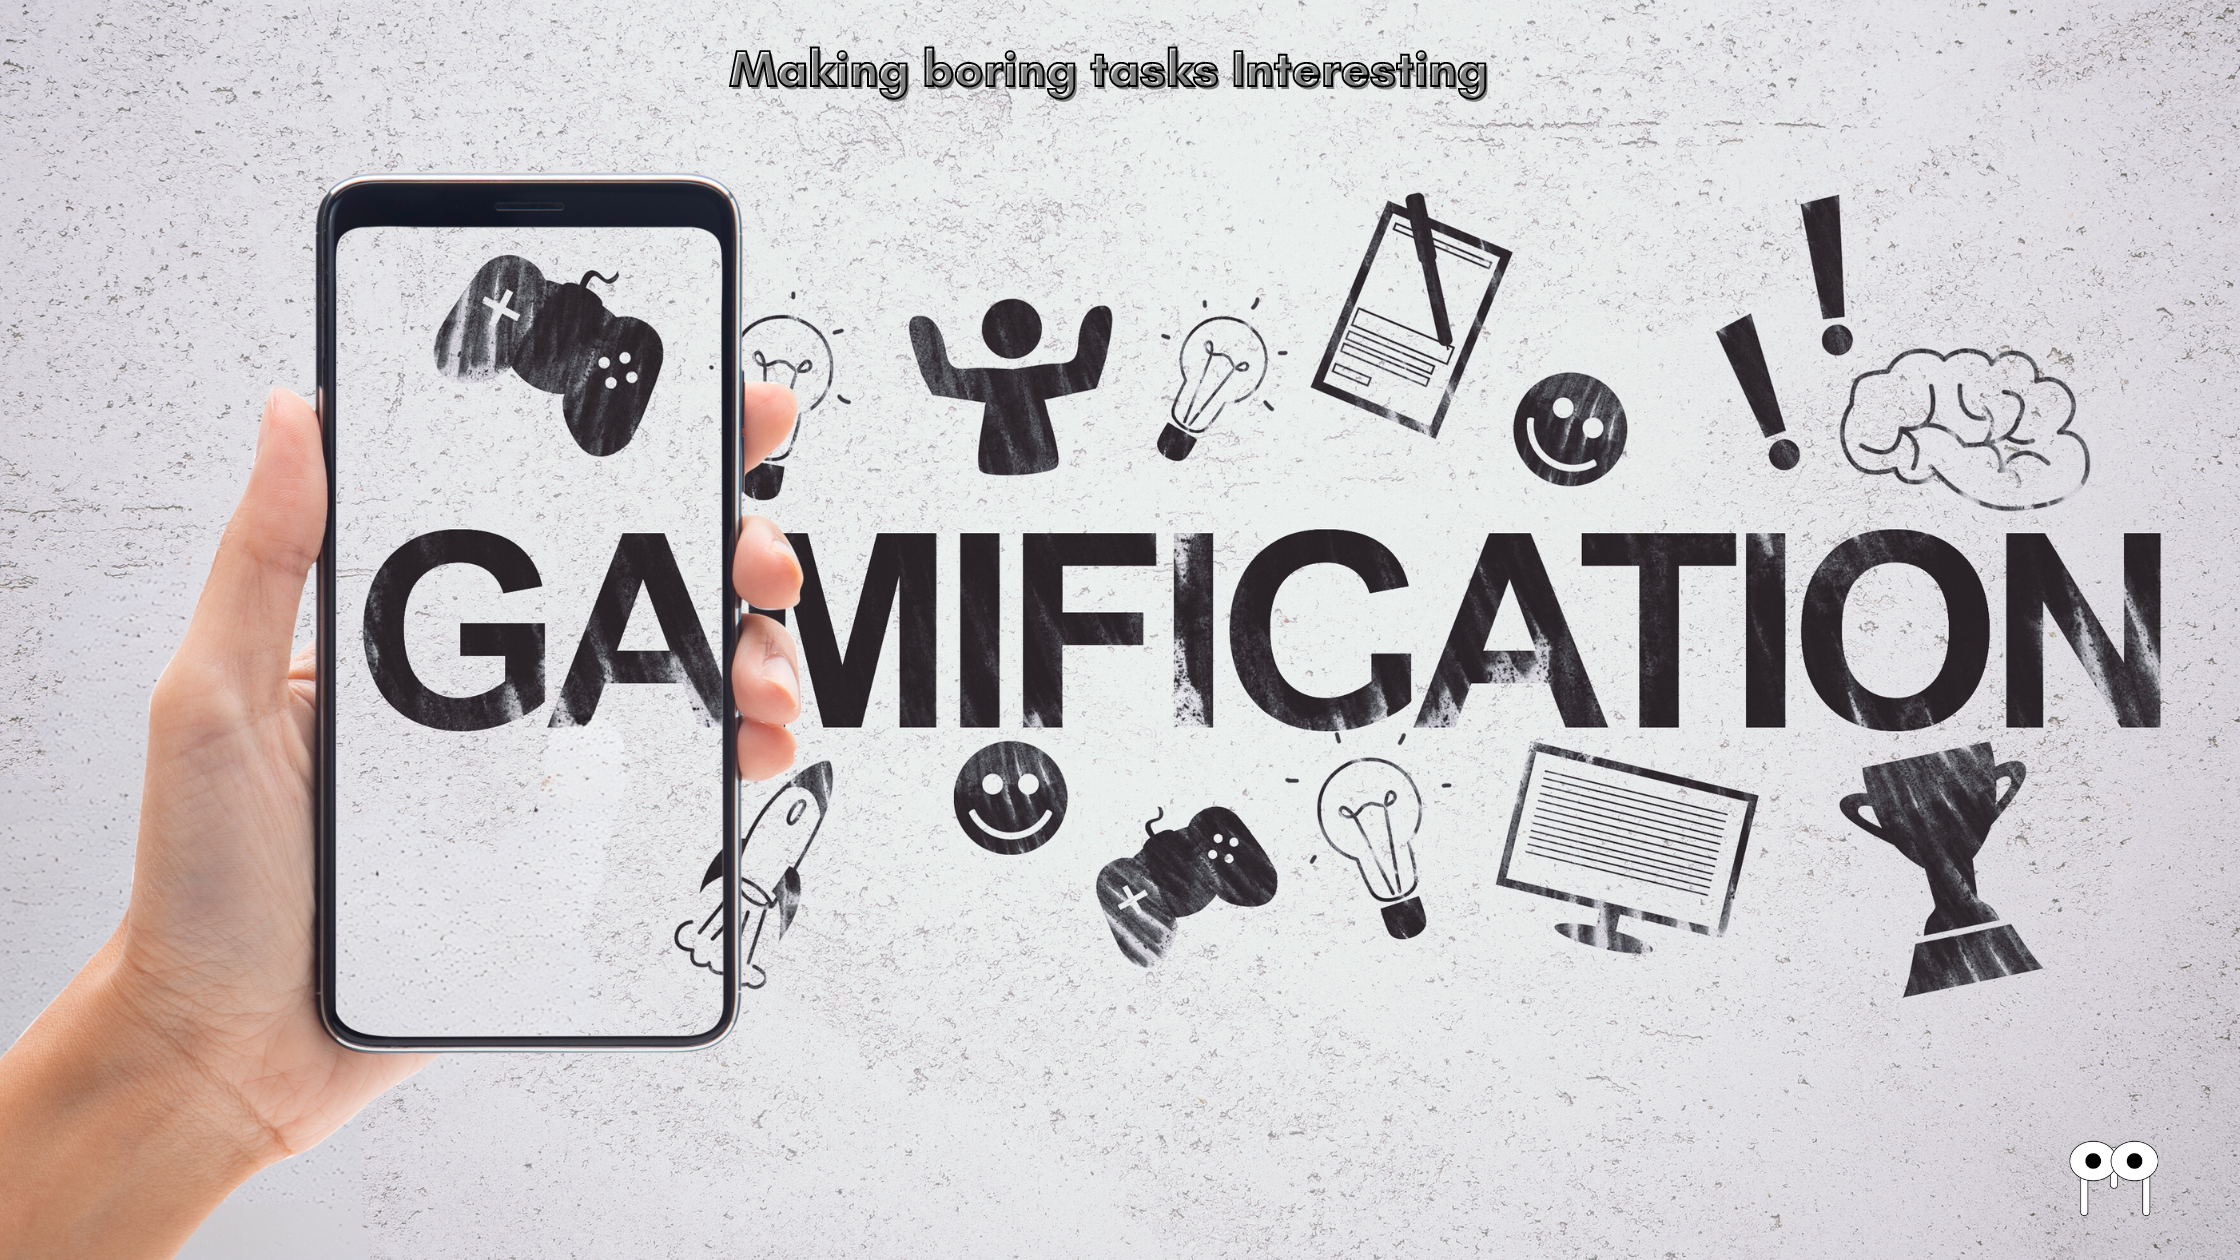 Gamification - Make it interesting